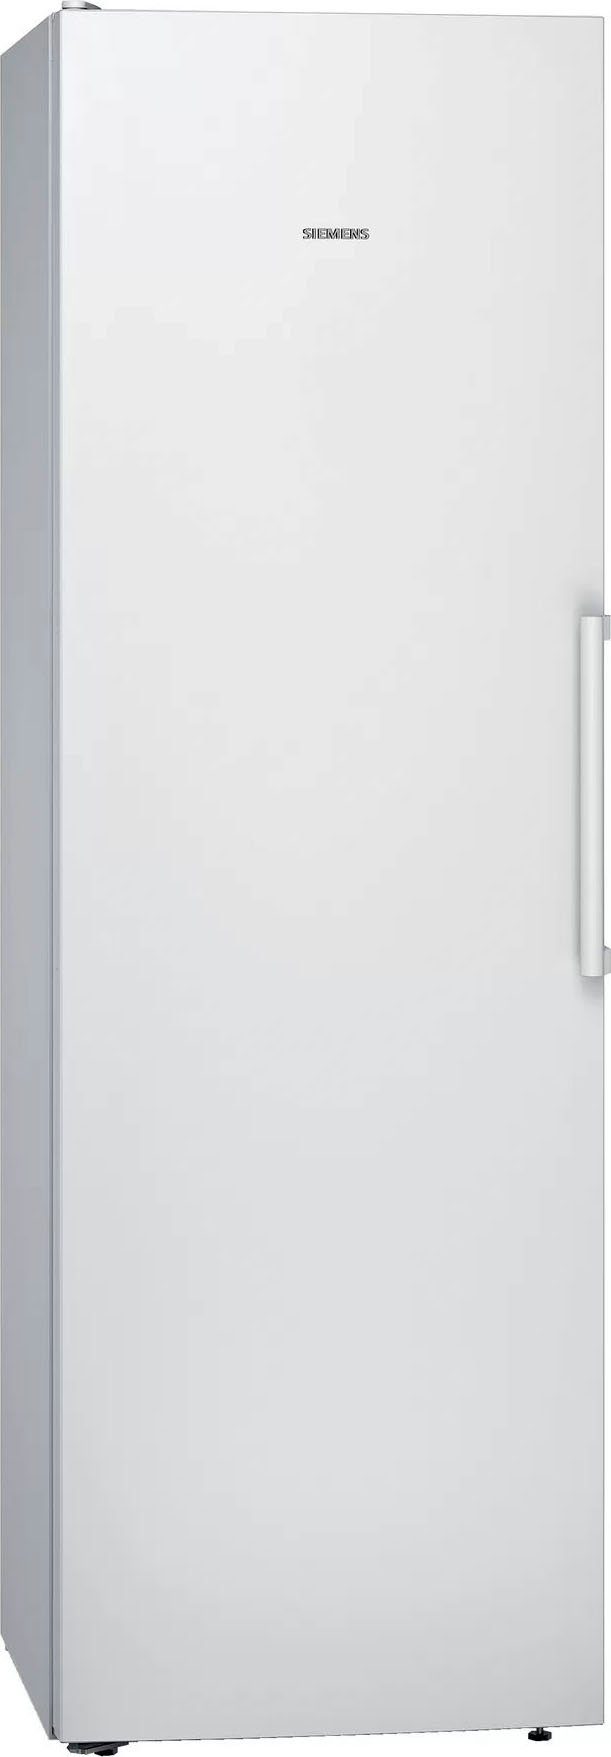 SIEMENS Kühlschrank iQ300 KS36VVWEP, 186 cm hoch, 60 cm breit